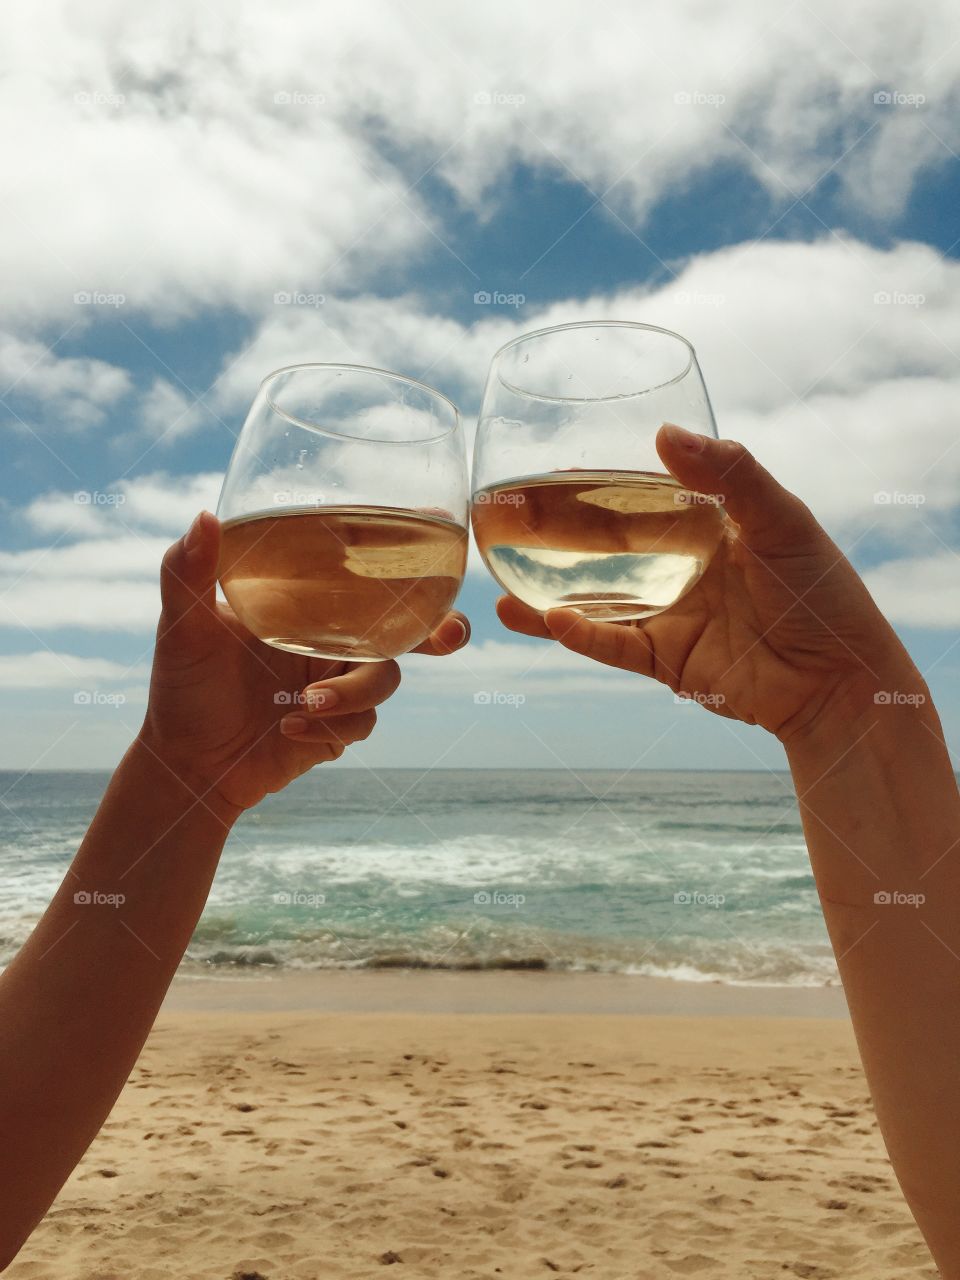 Cheers on the beach